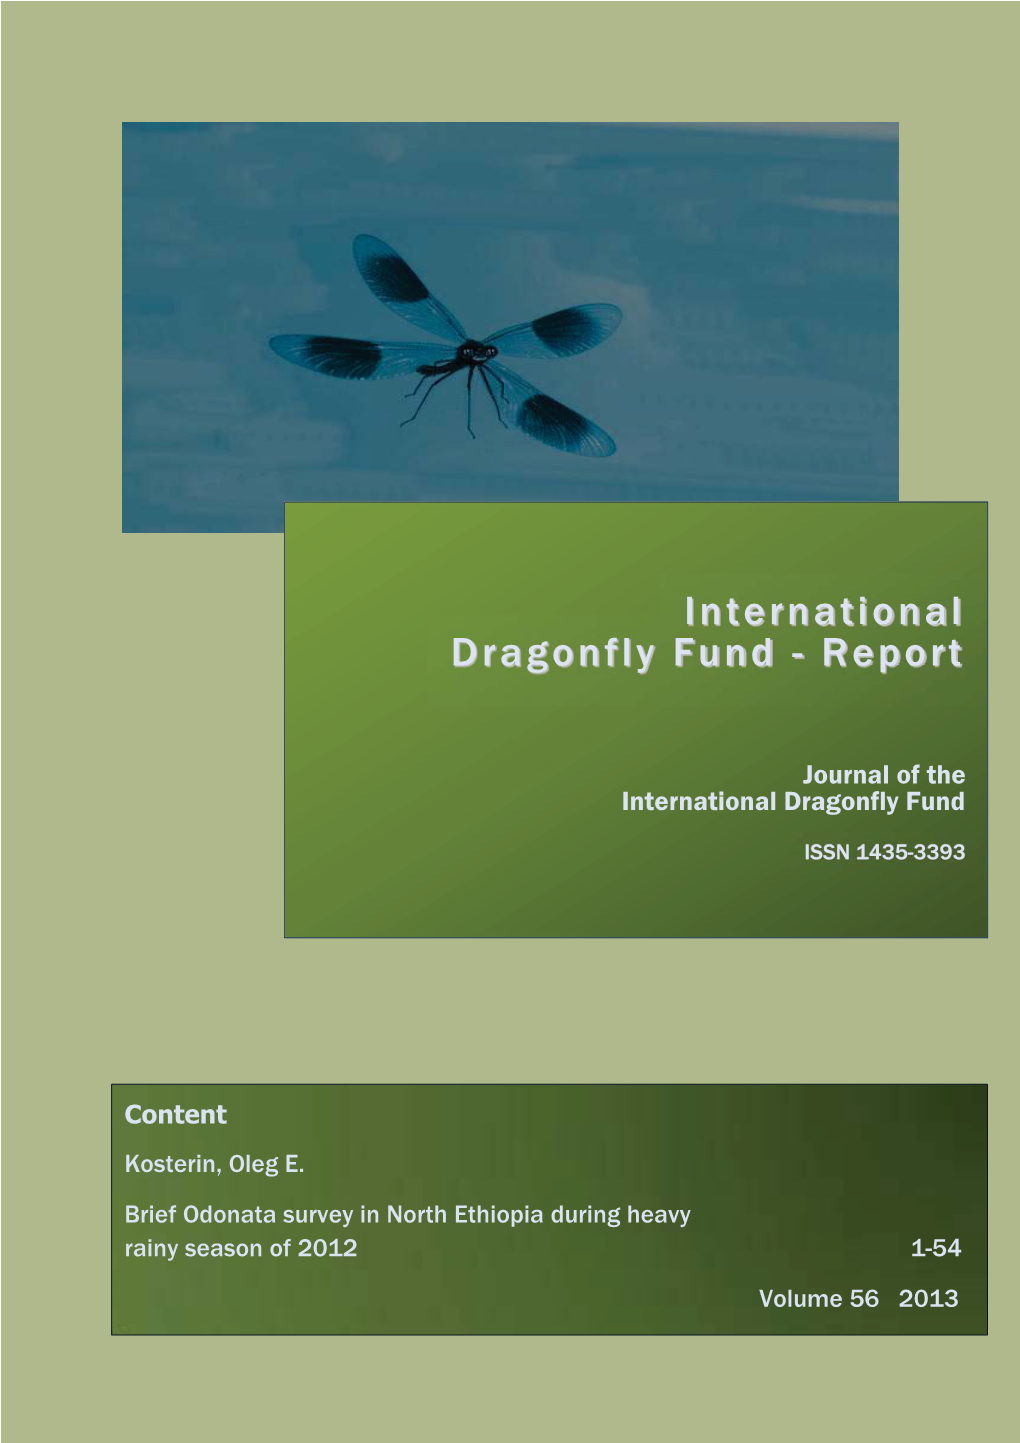 Brief Odonata Survey in North Ethiopia During Heavy Rainy Season of 2012 1-54